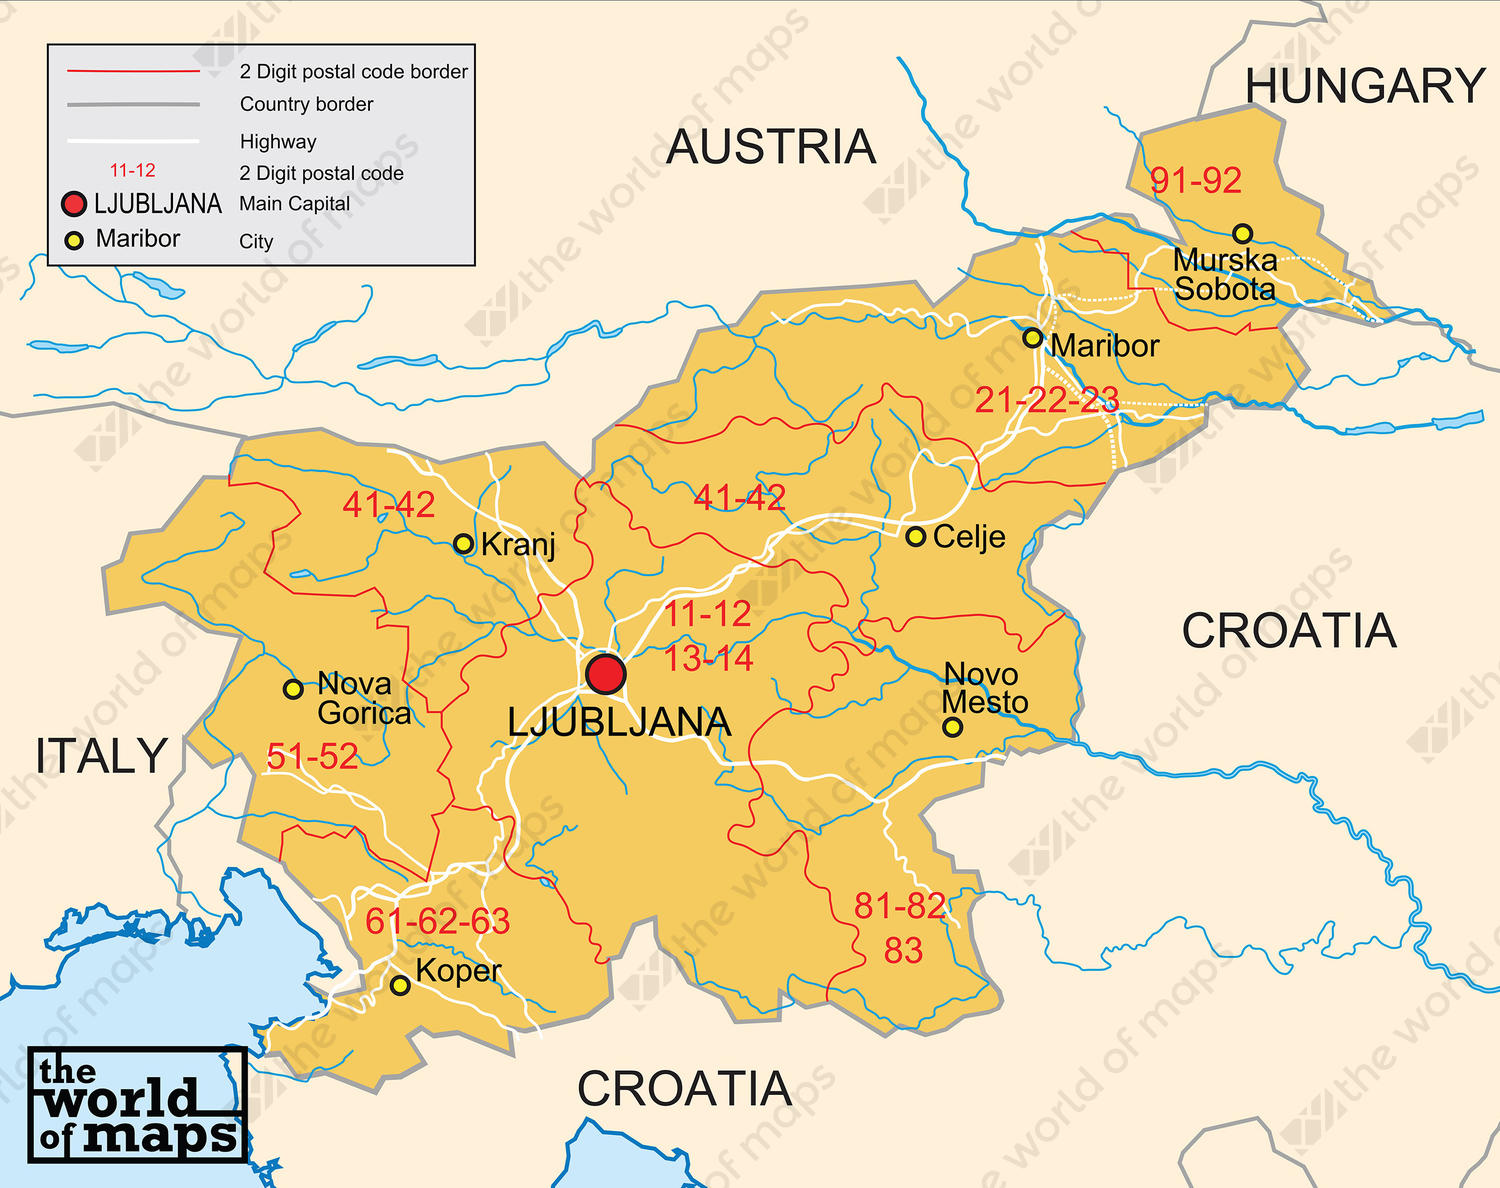 Digital postcode map Slovenia 2-digit